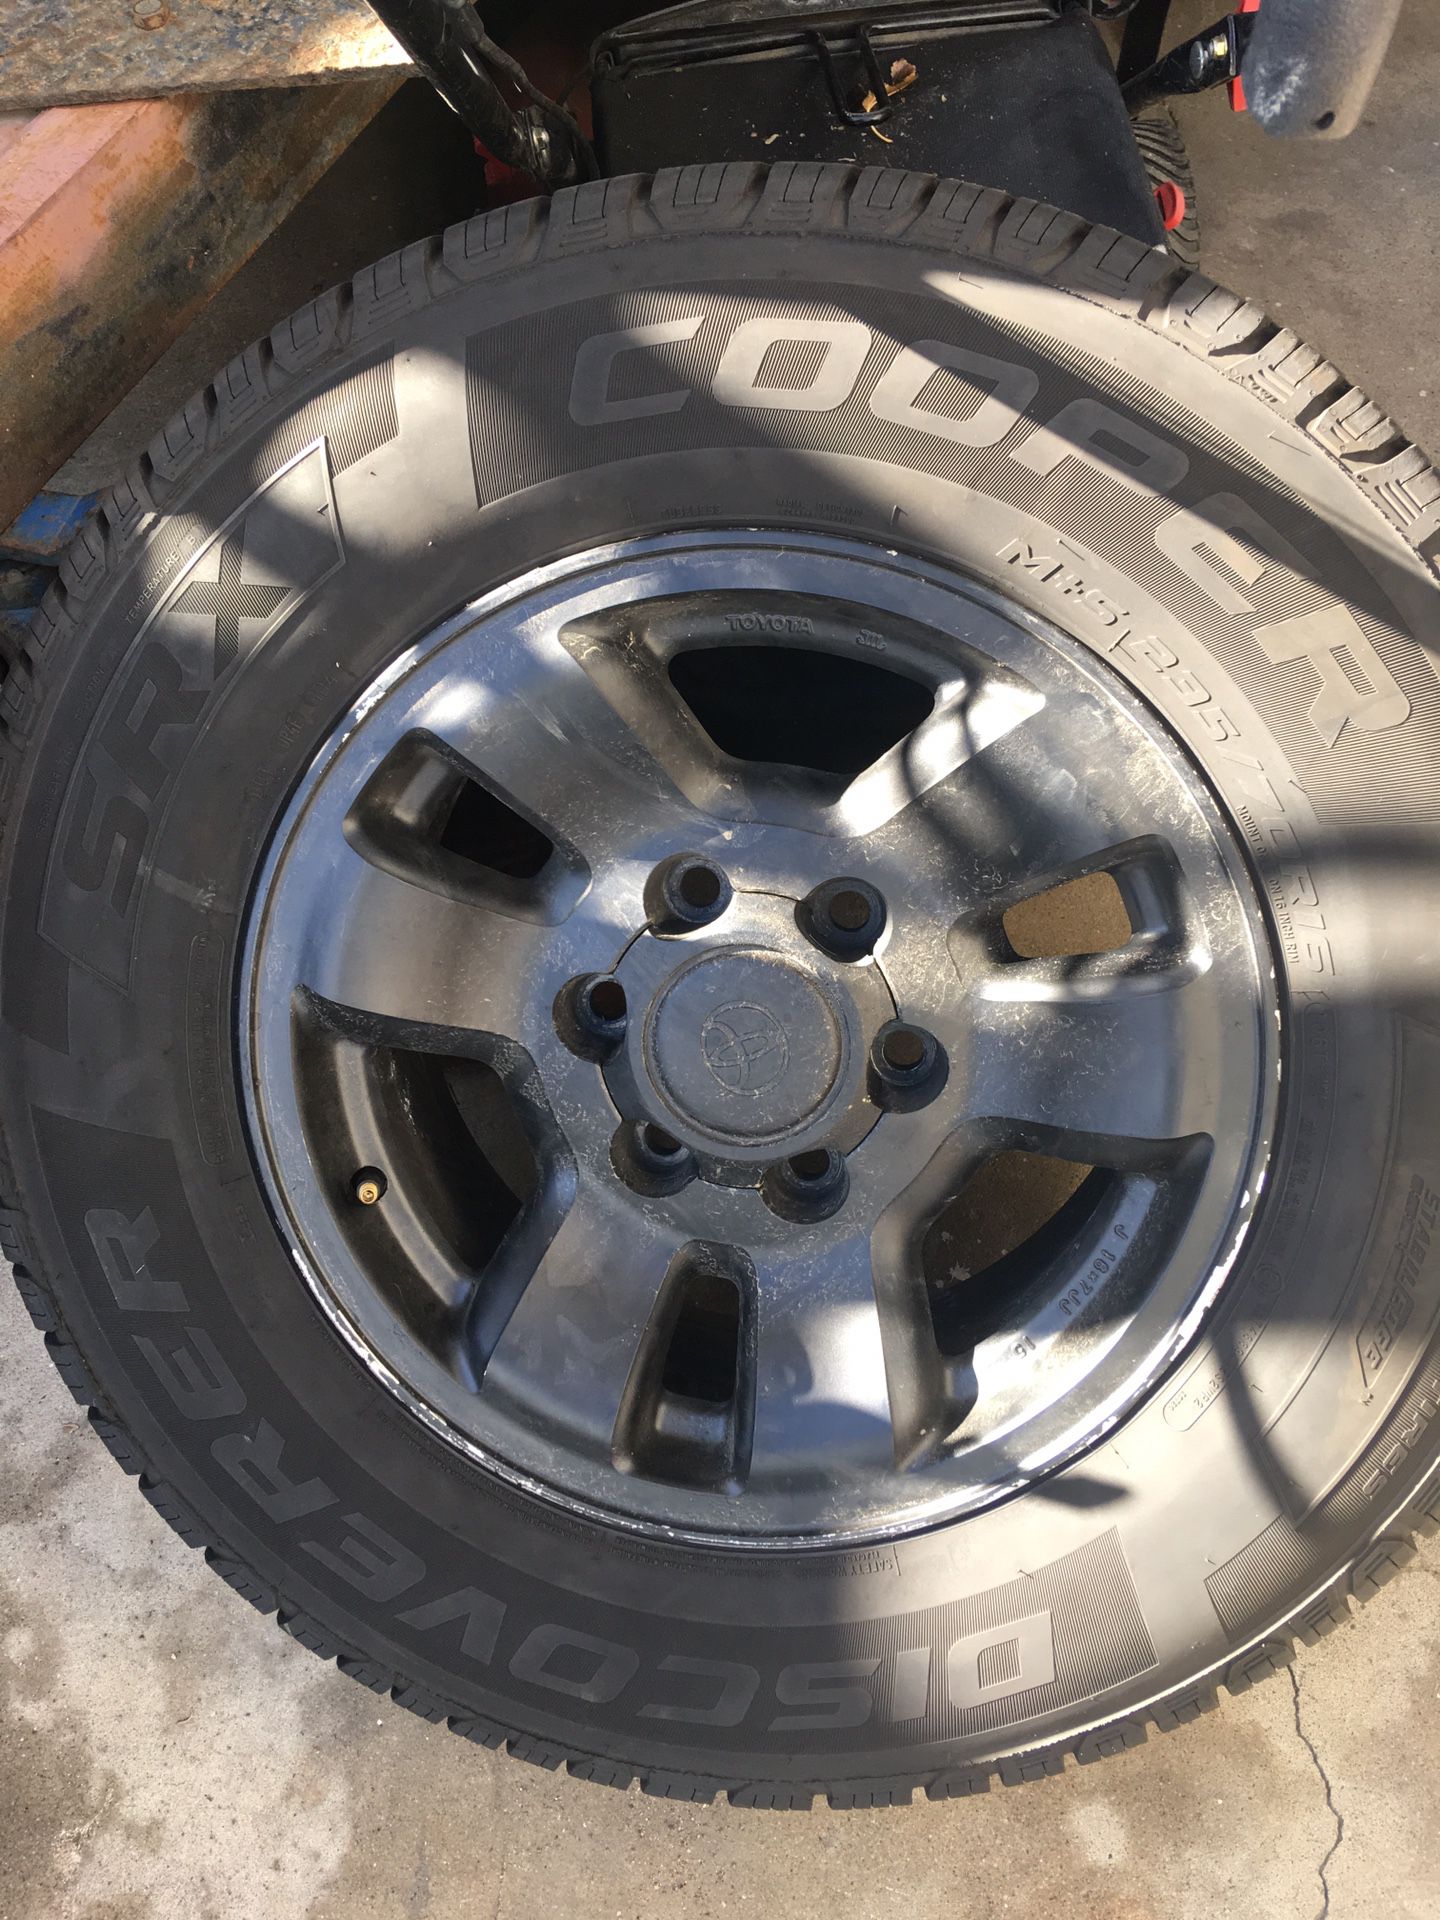 Toyota truck stock wheels 235/70/16 tires